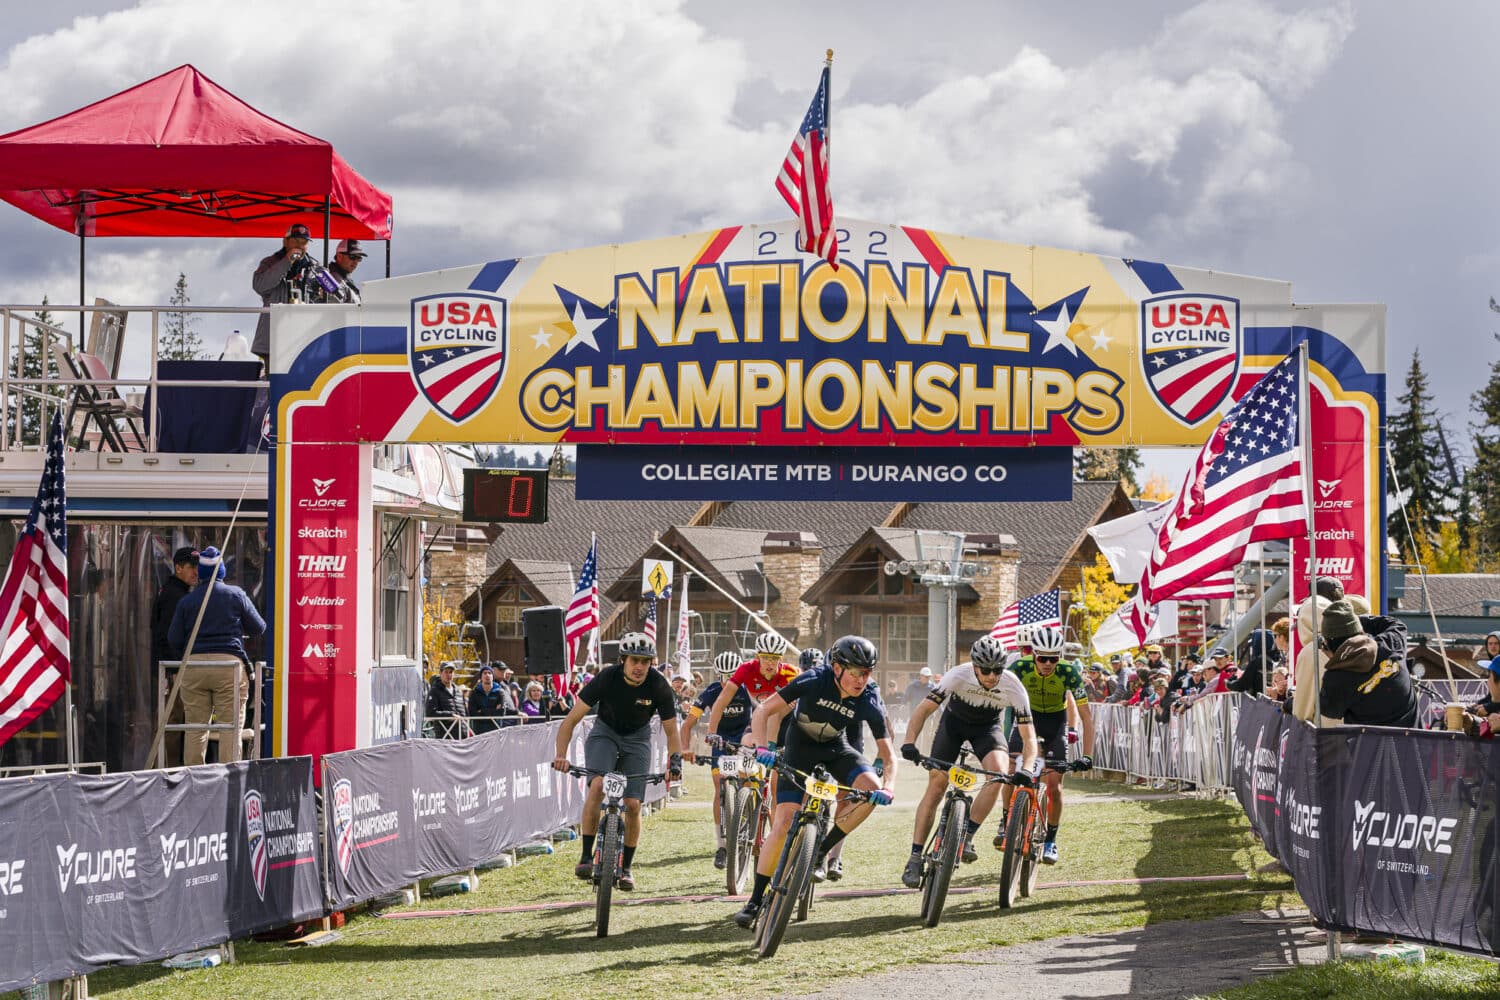 2022 USA Cycling Collegiate MTB National Championship